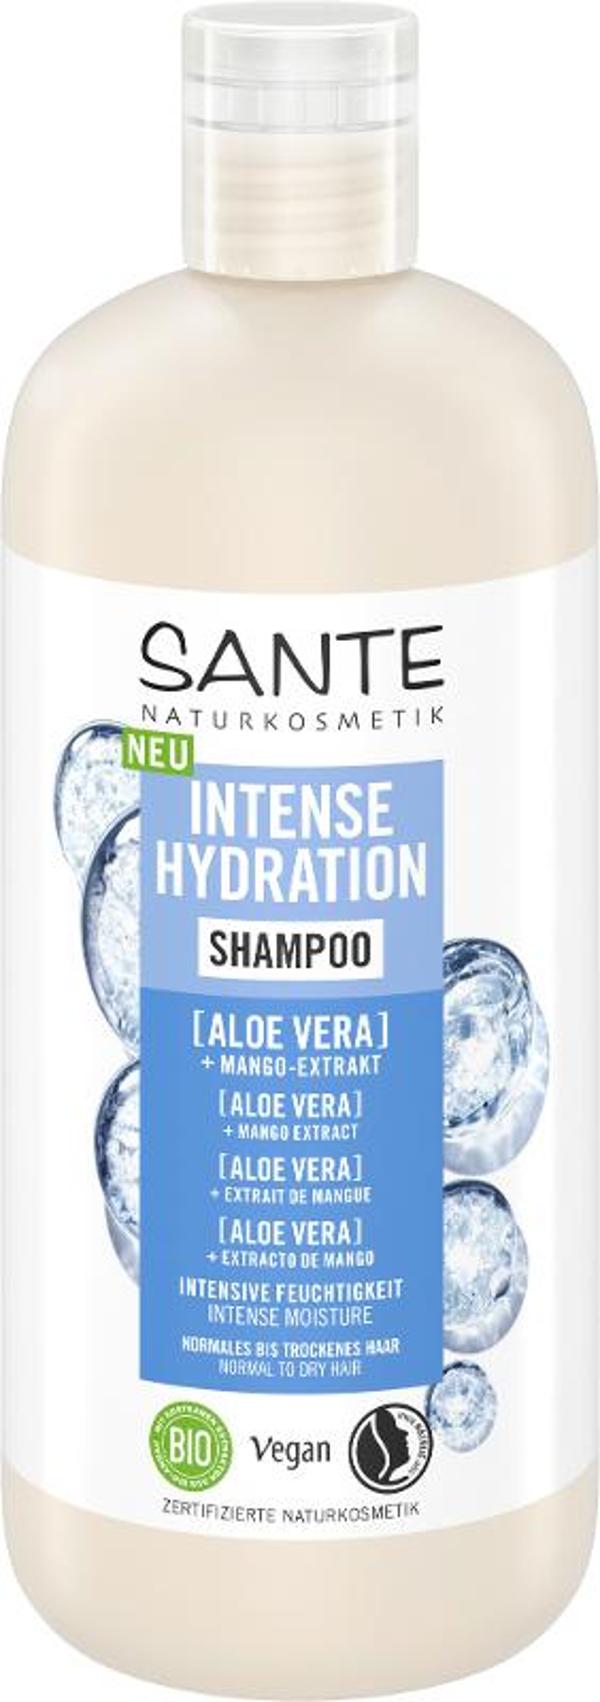 Produktfoto zu Intense Hydration Shampoo Hyaluron 500ml Sante